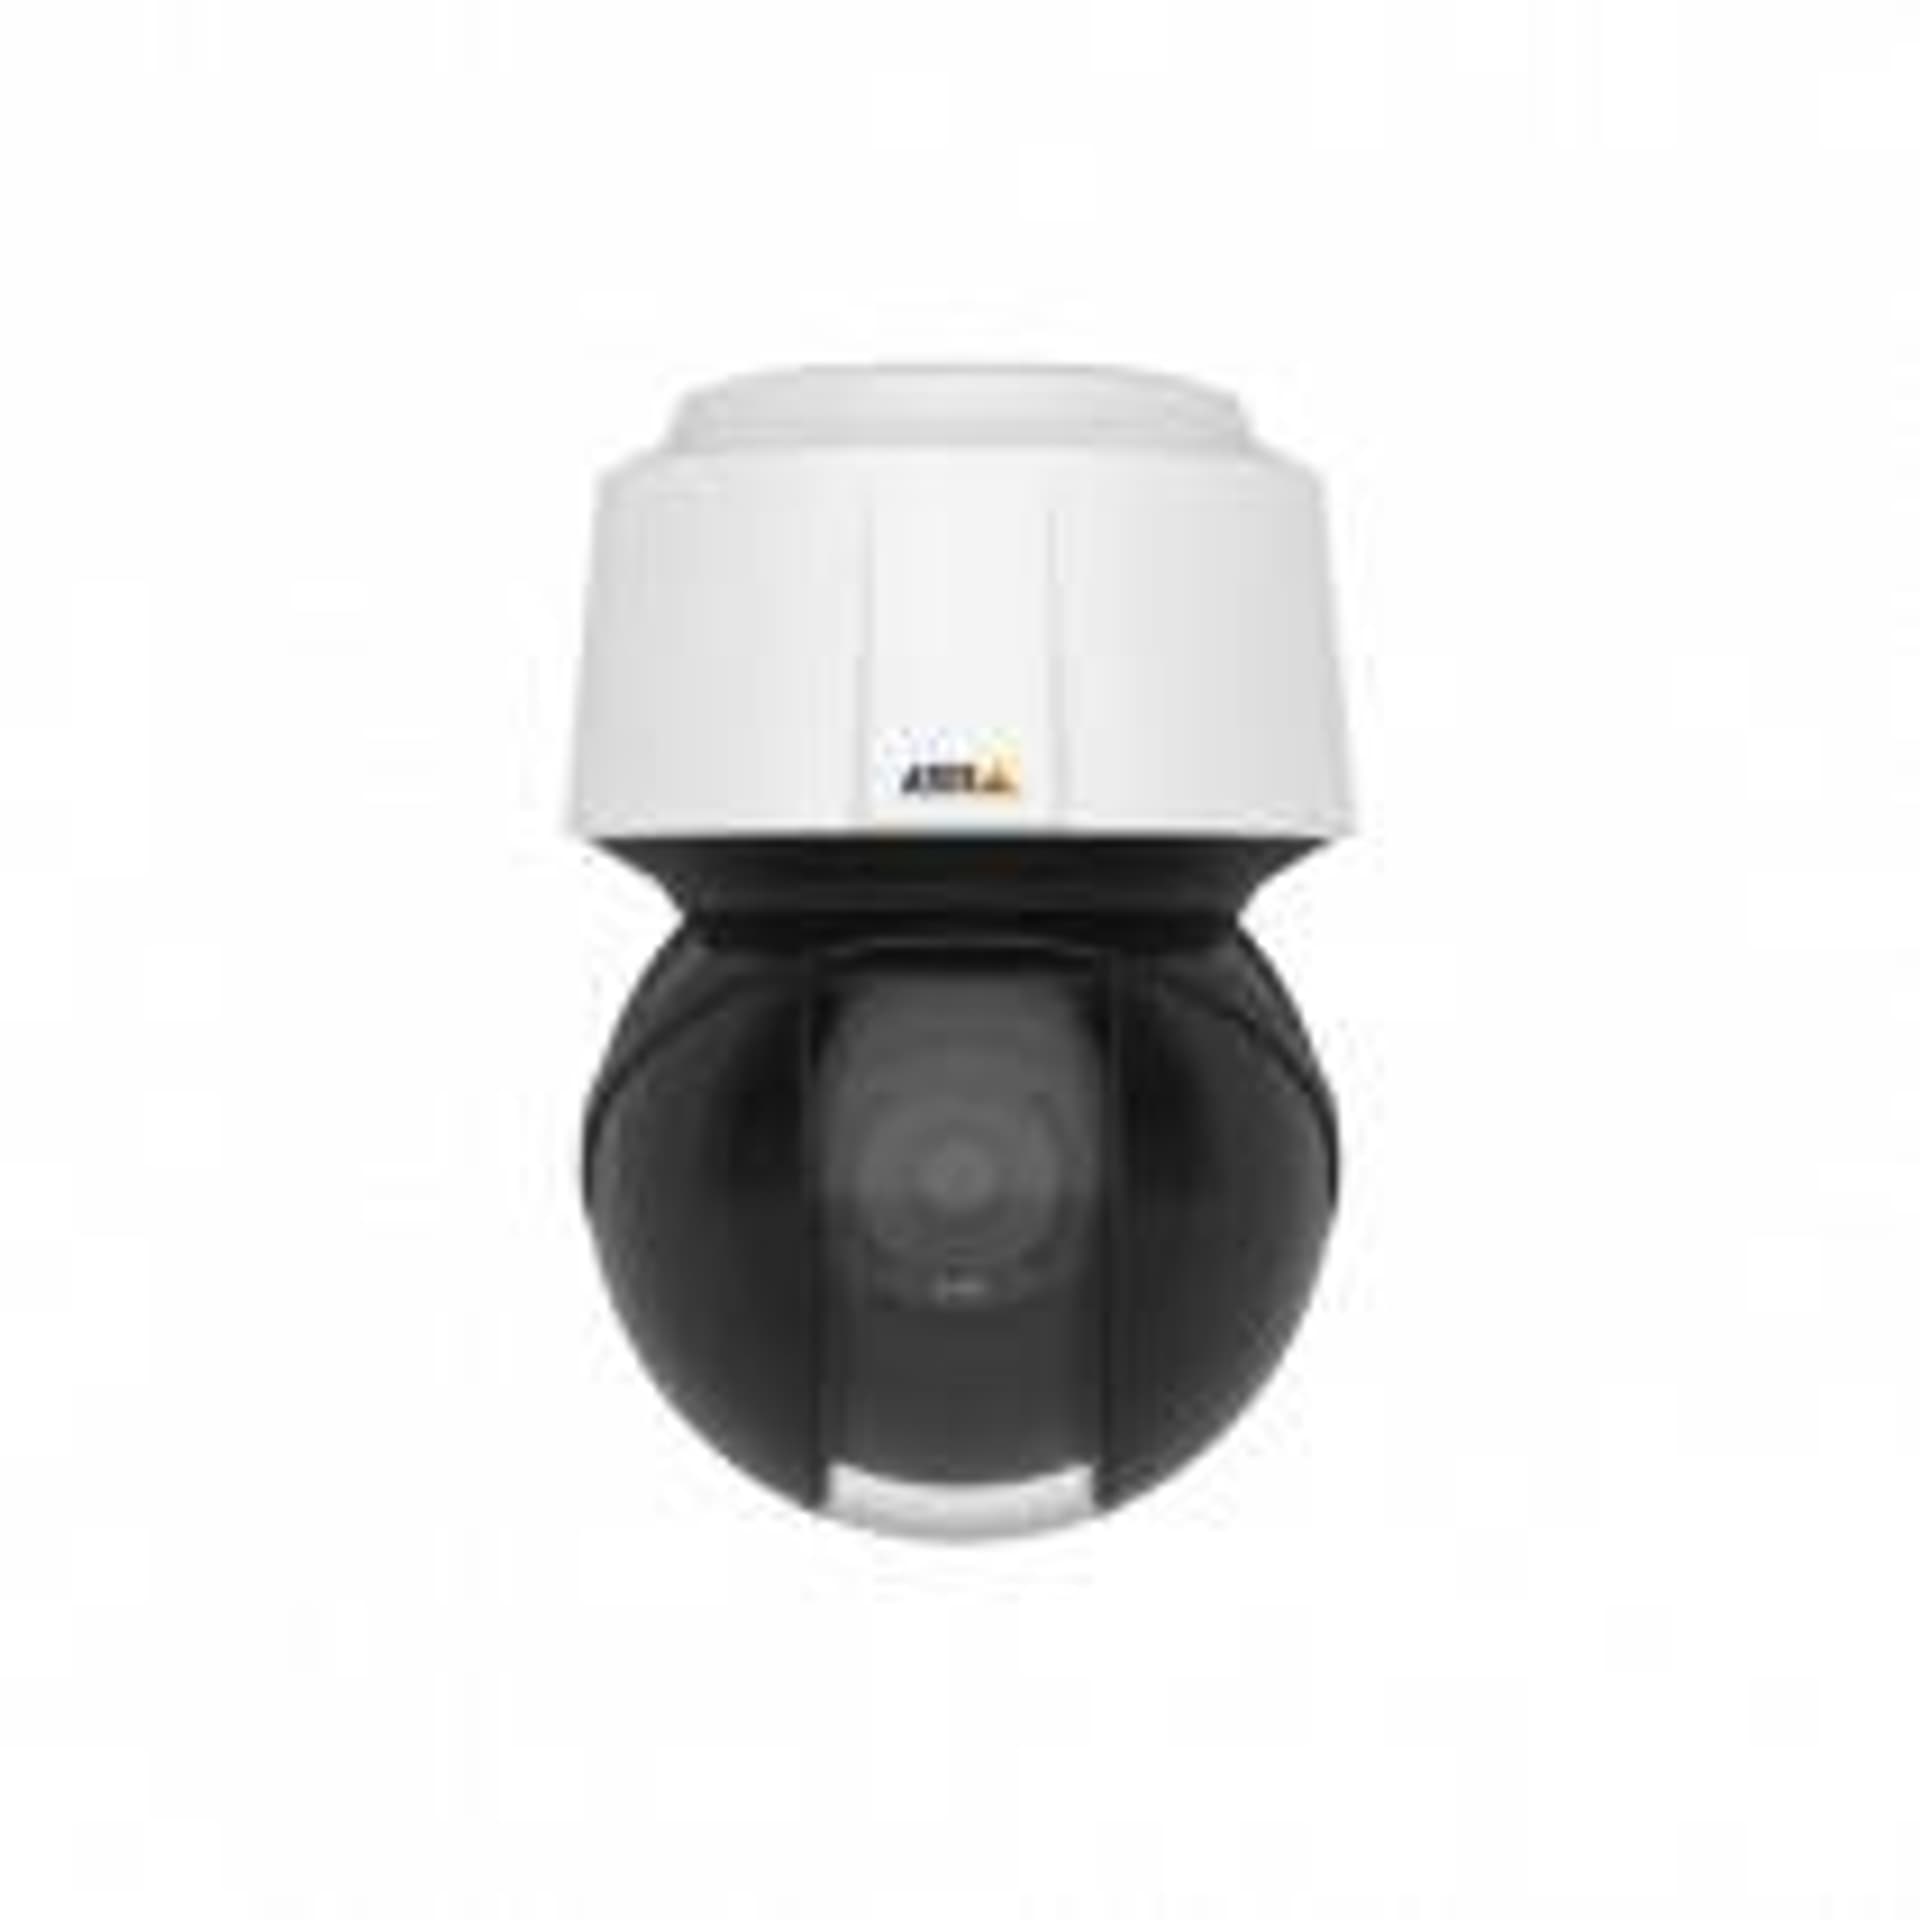 Zdjęcia - Kamera do monitoringu Axis Q6135-LE 50HZ PTZ camera with 